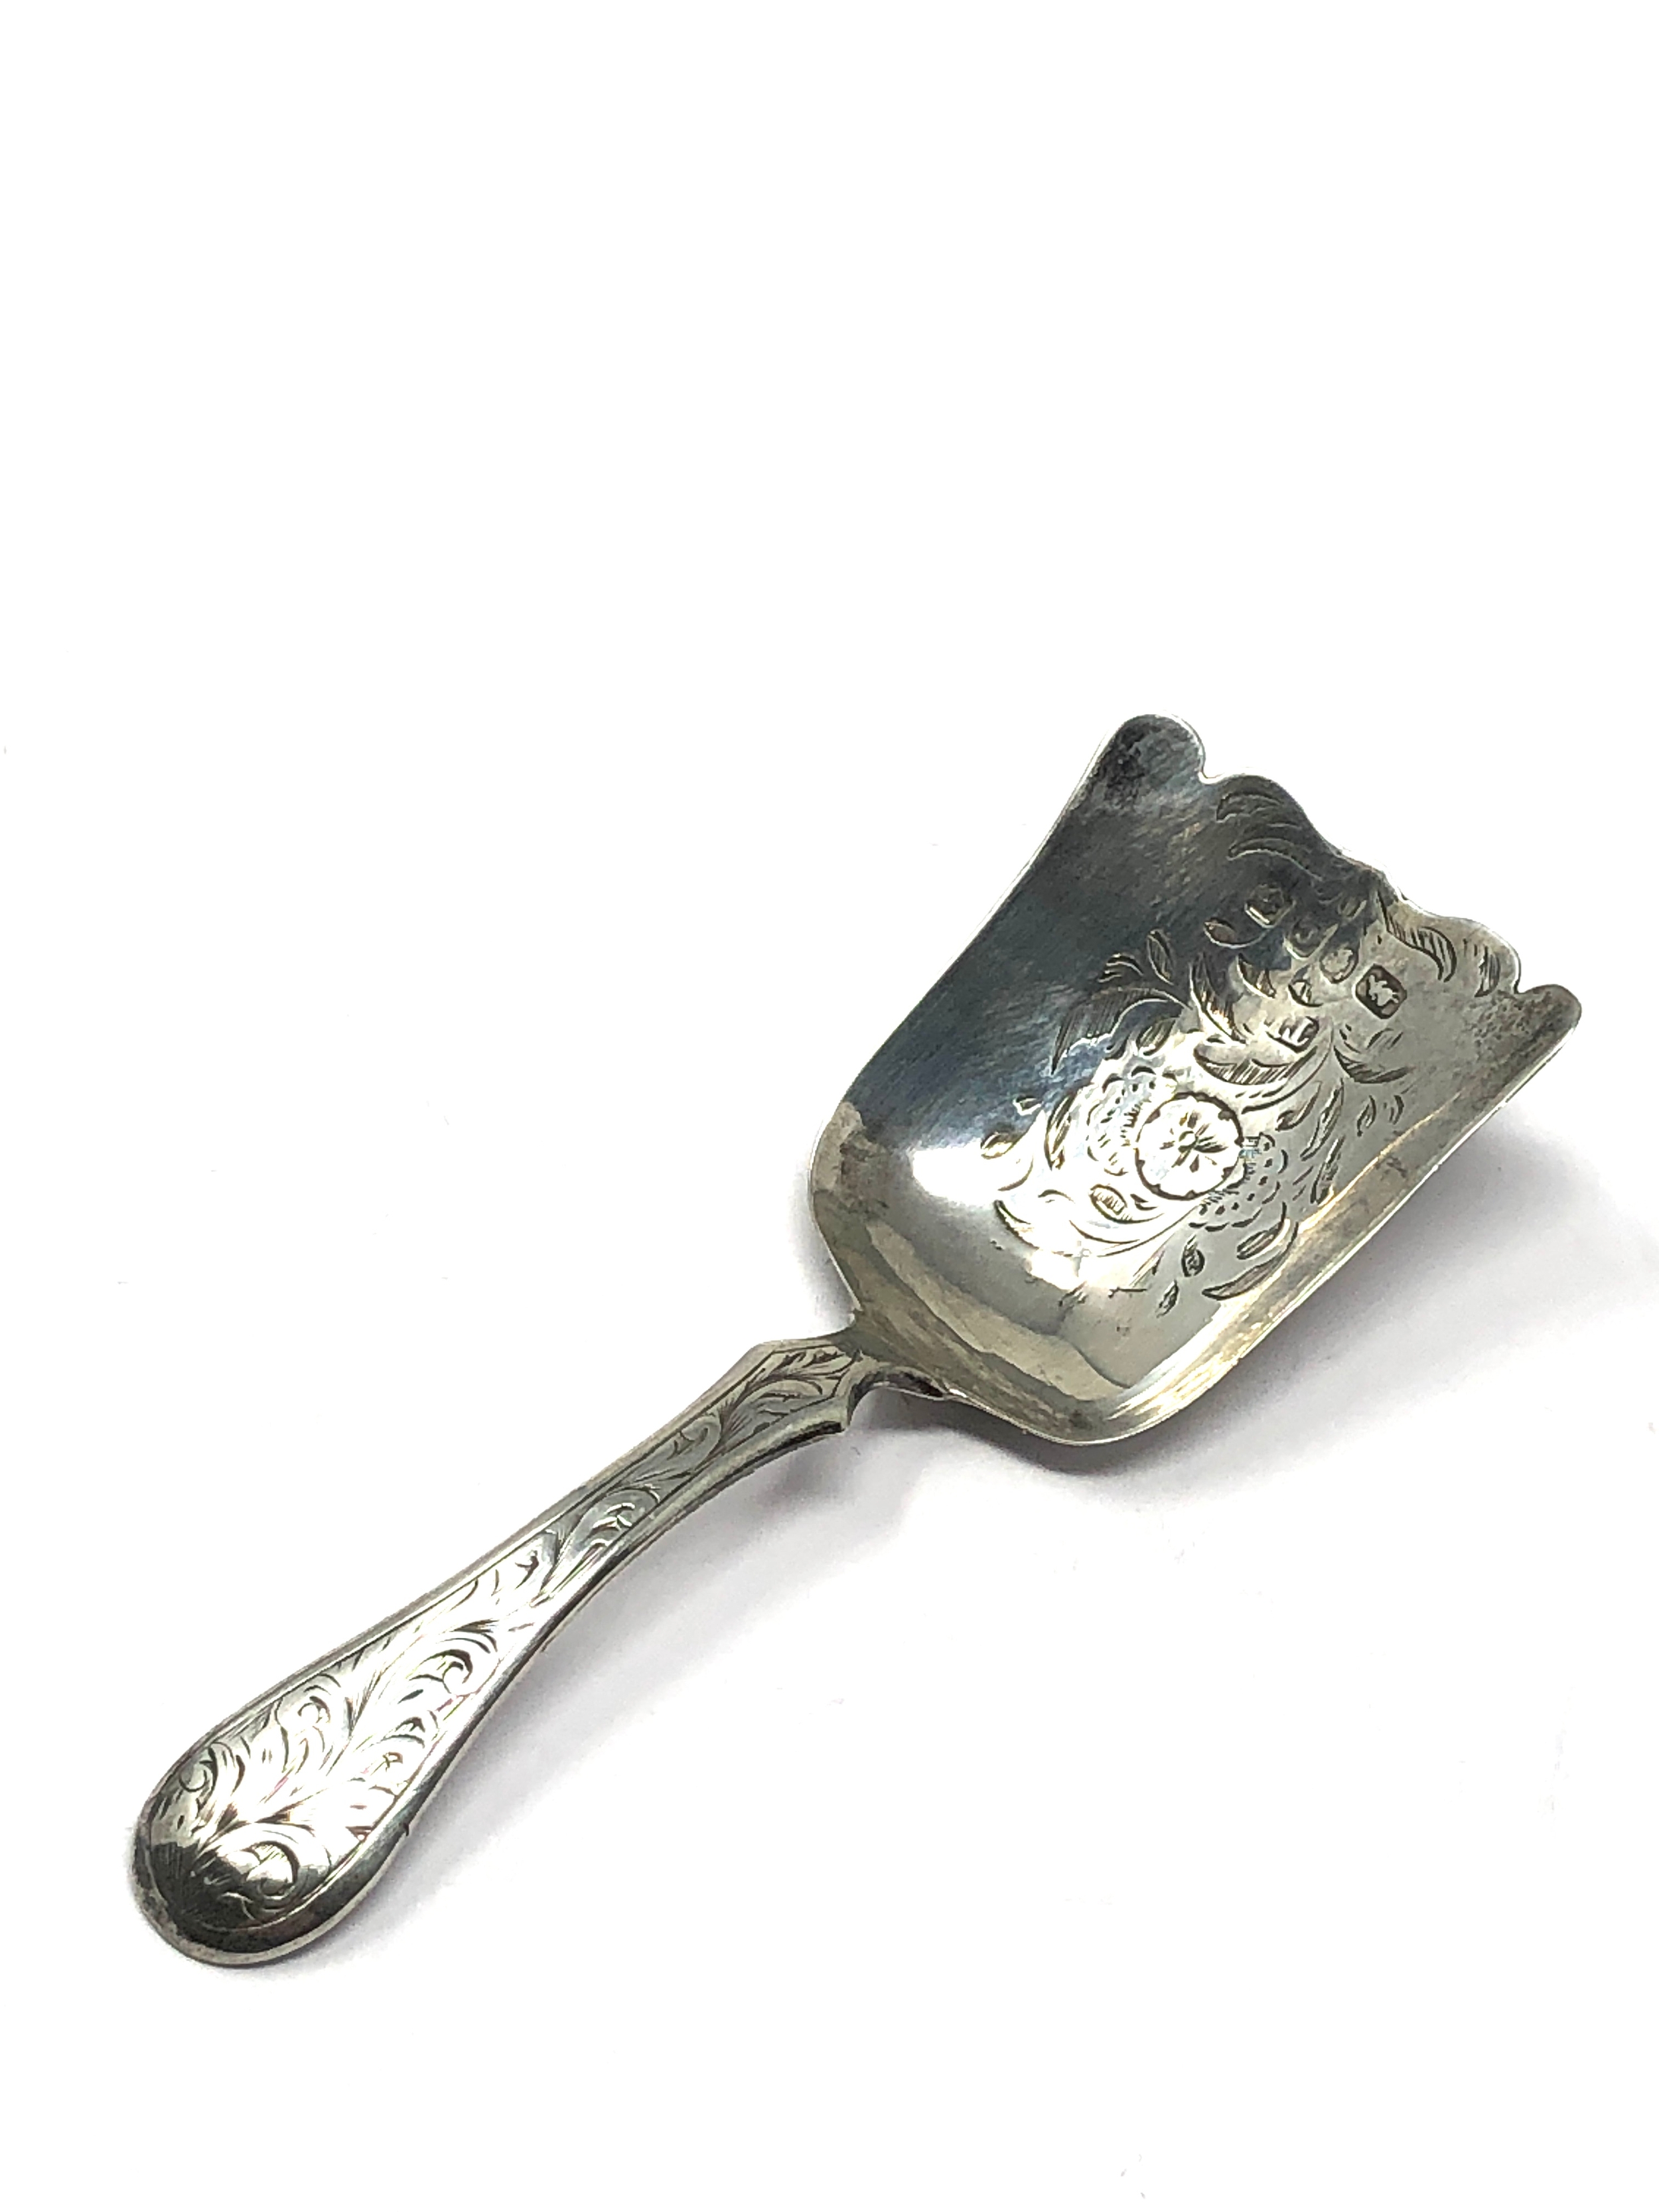 Antique Victorian silver tea caddy spoon - Image 2 of 4